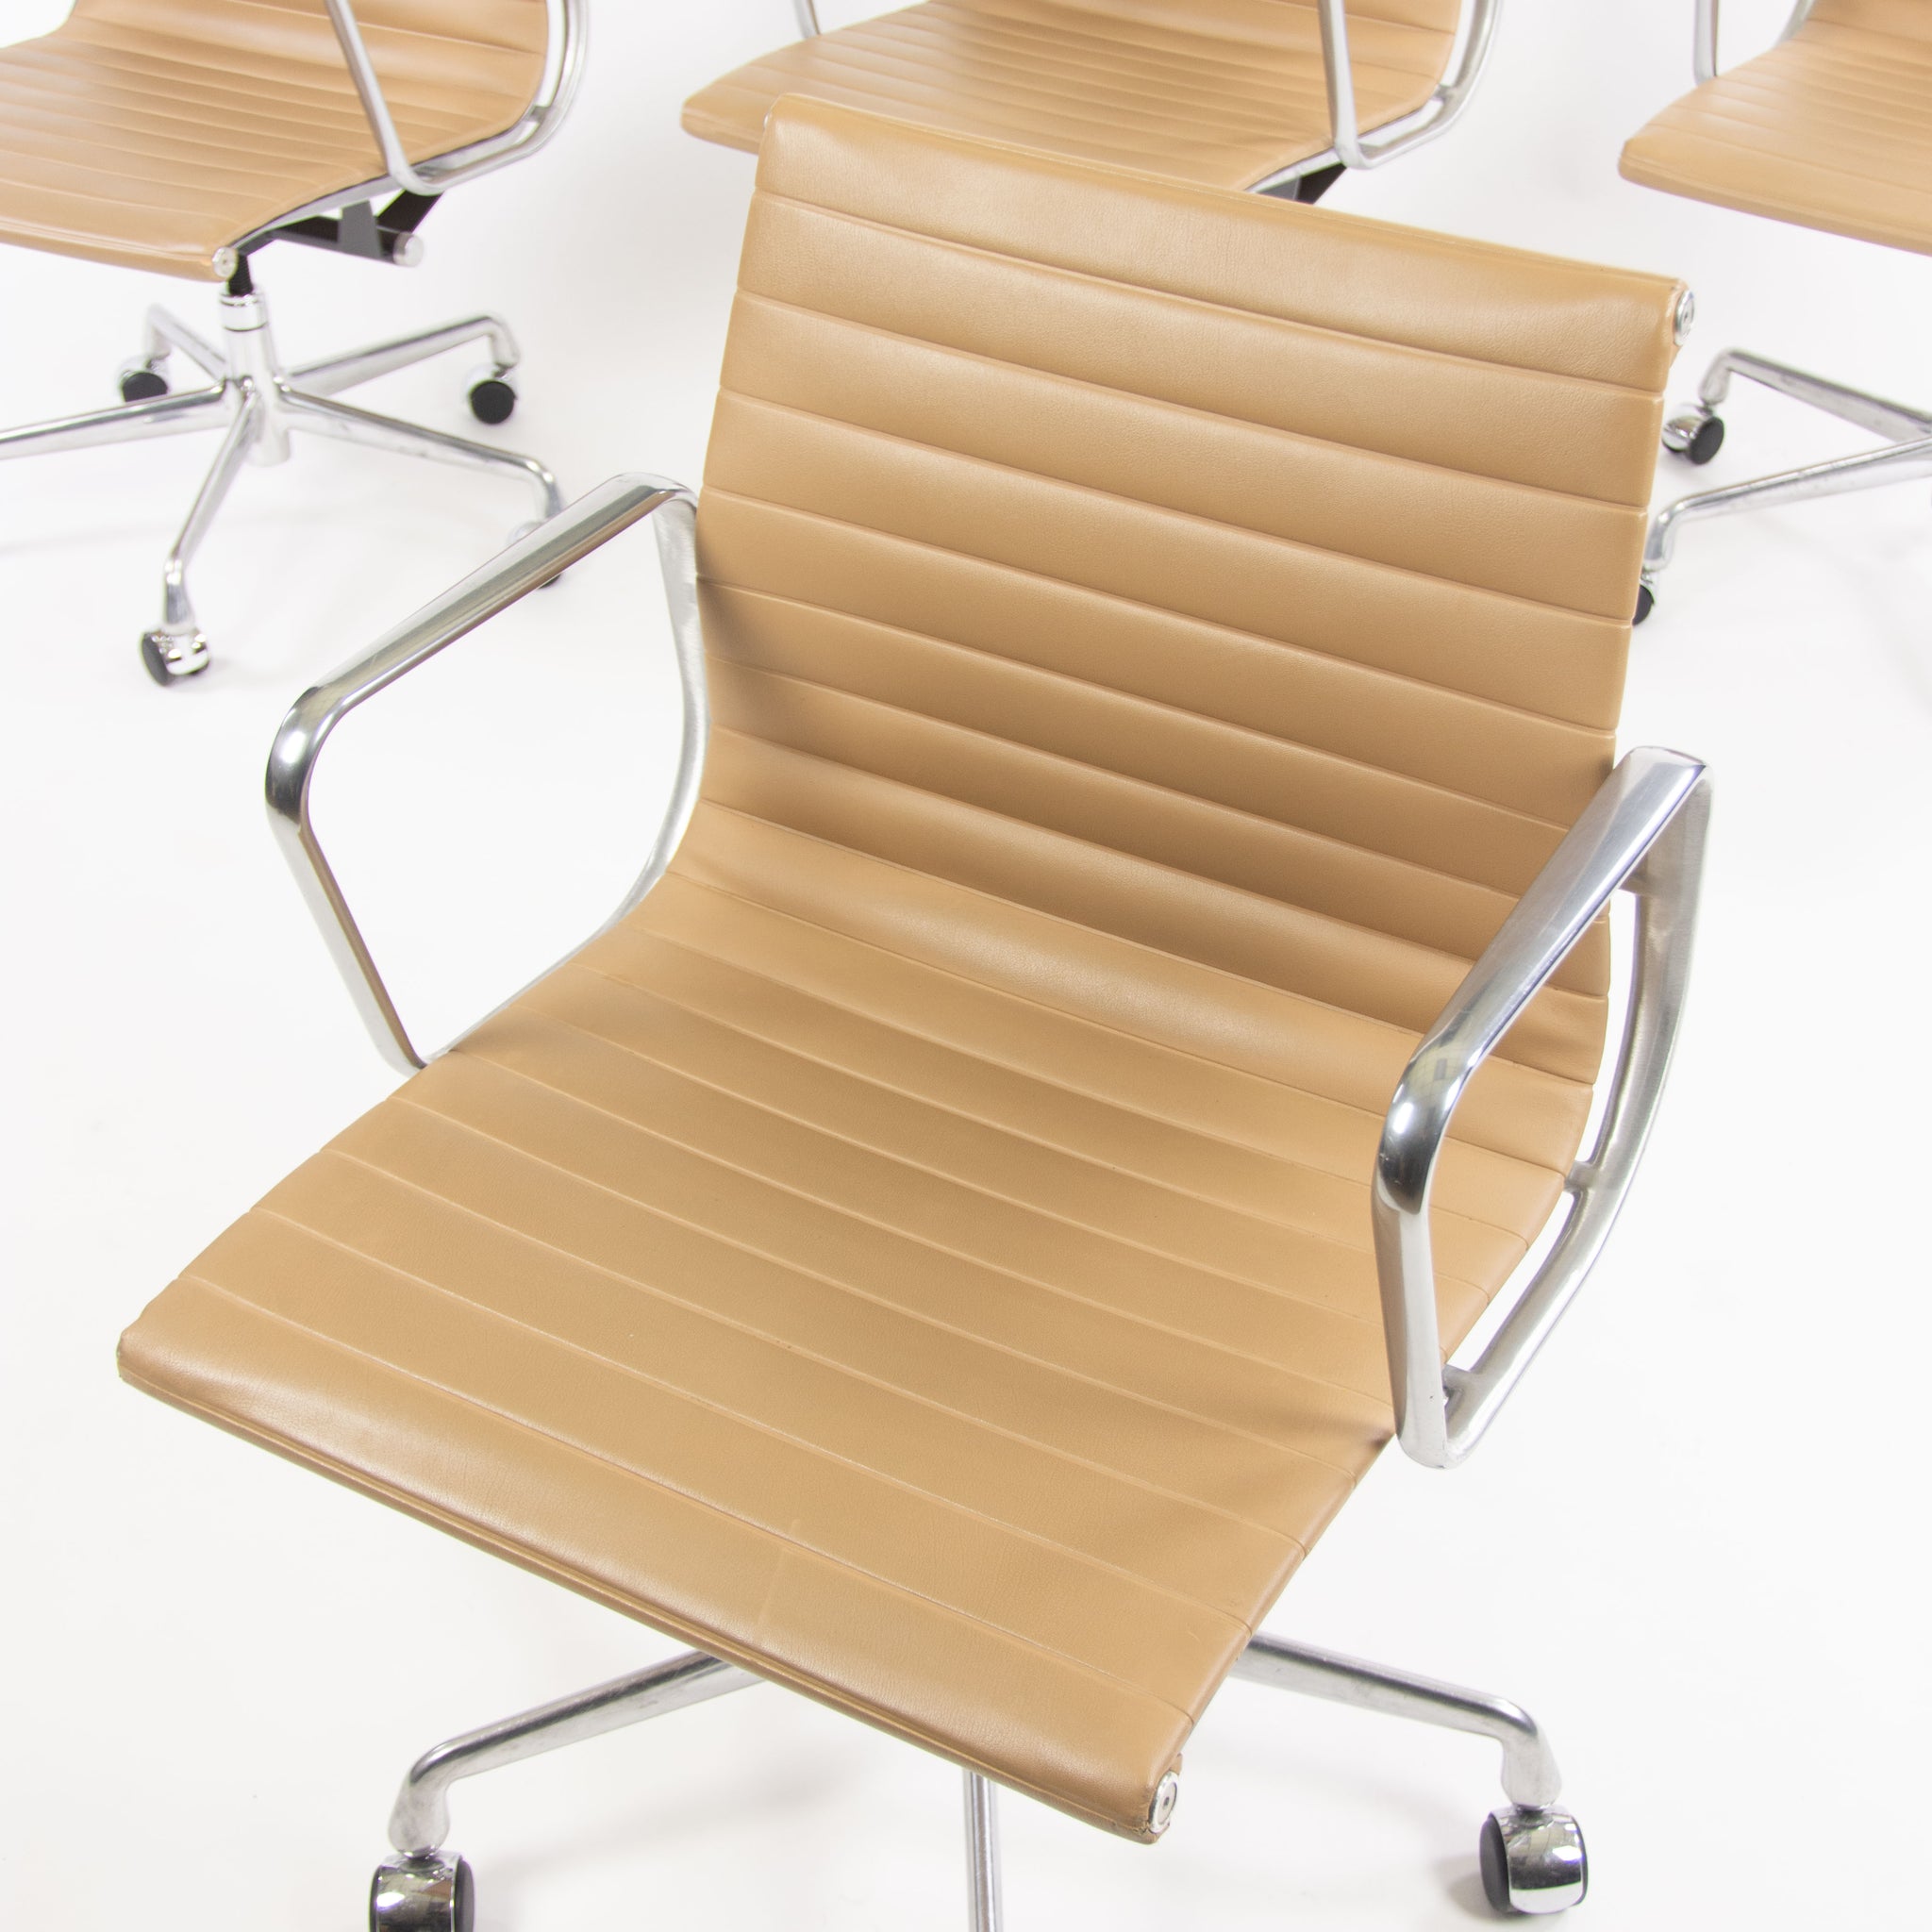 2008 Herman Miller Eames Aluminum Group Management Desk Chair in Tan Naugahyde Multiples Available